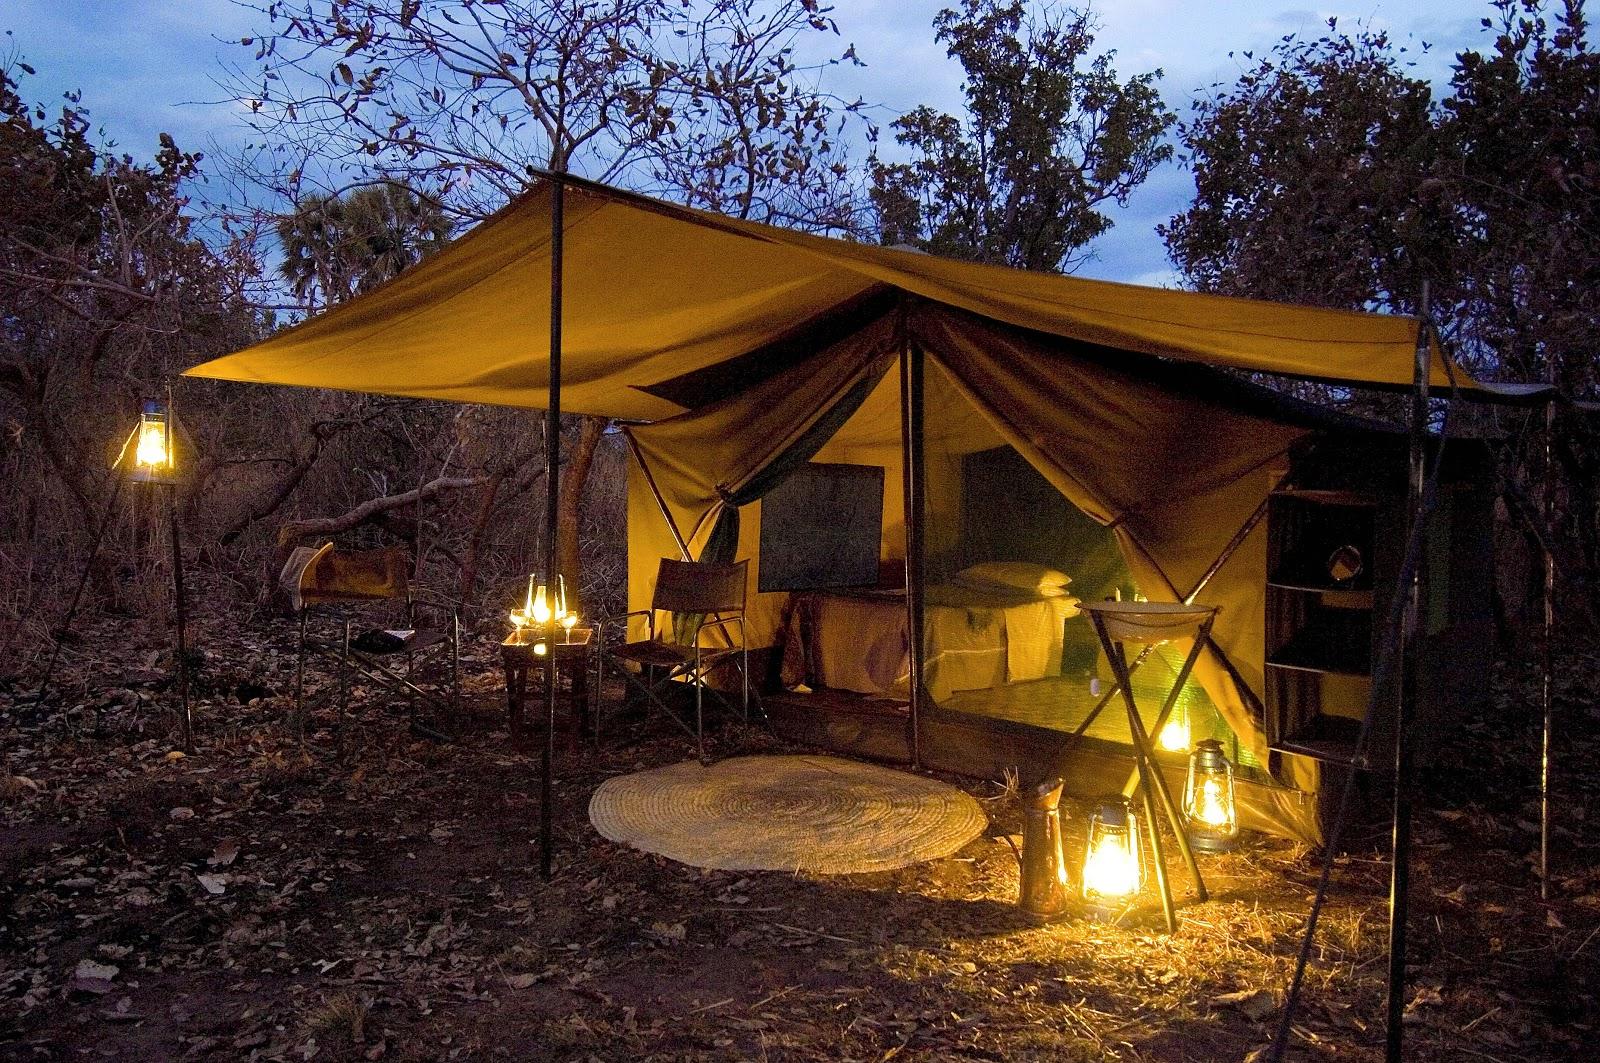 Where will I stay on safari?, Tent